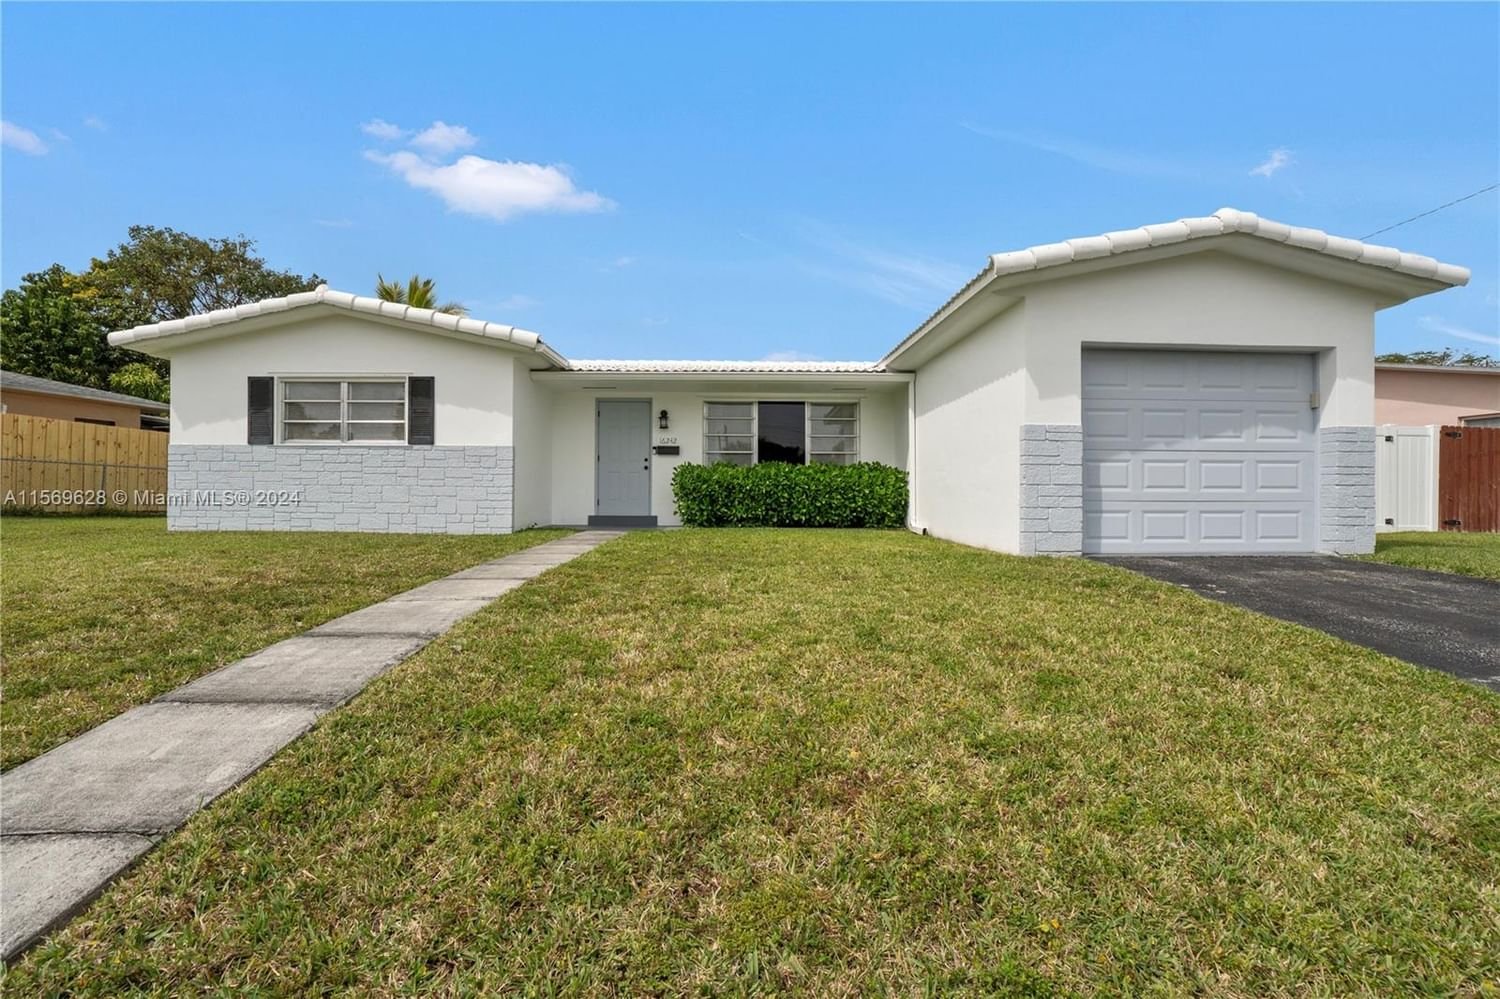 Real estate property located at 16242 107th Ct, Miami-Dade County, FAIRWAY LAKE SOUTH SEC 1, Miami, FL